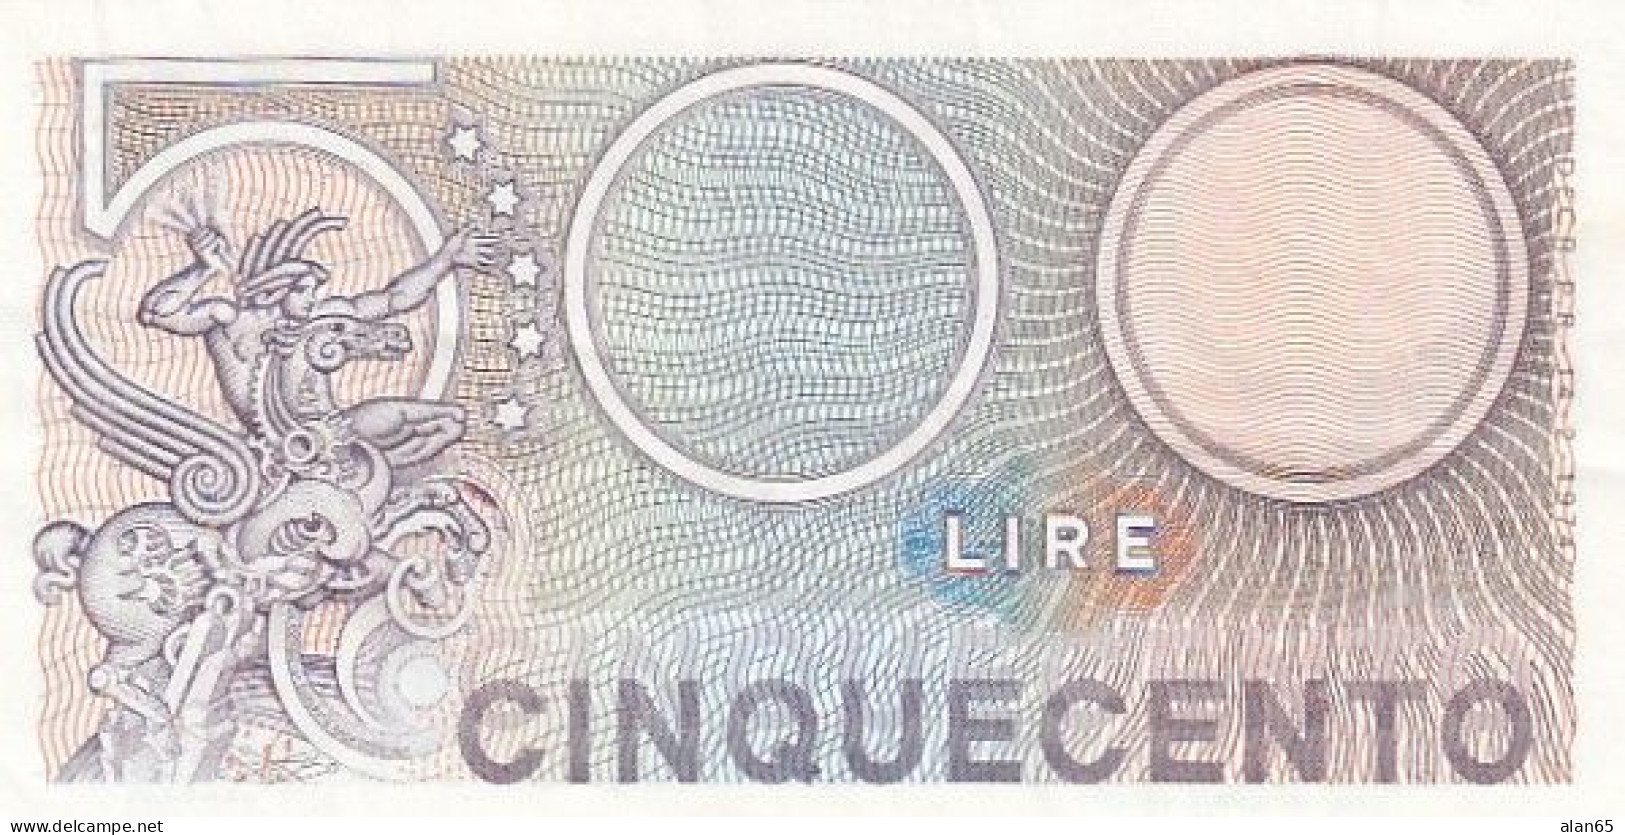 Italy #94, 500 Lire 1974 Banknote - 500 Lire